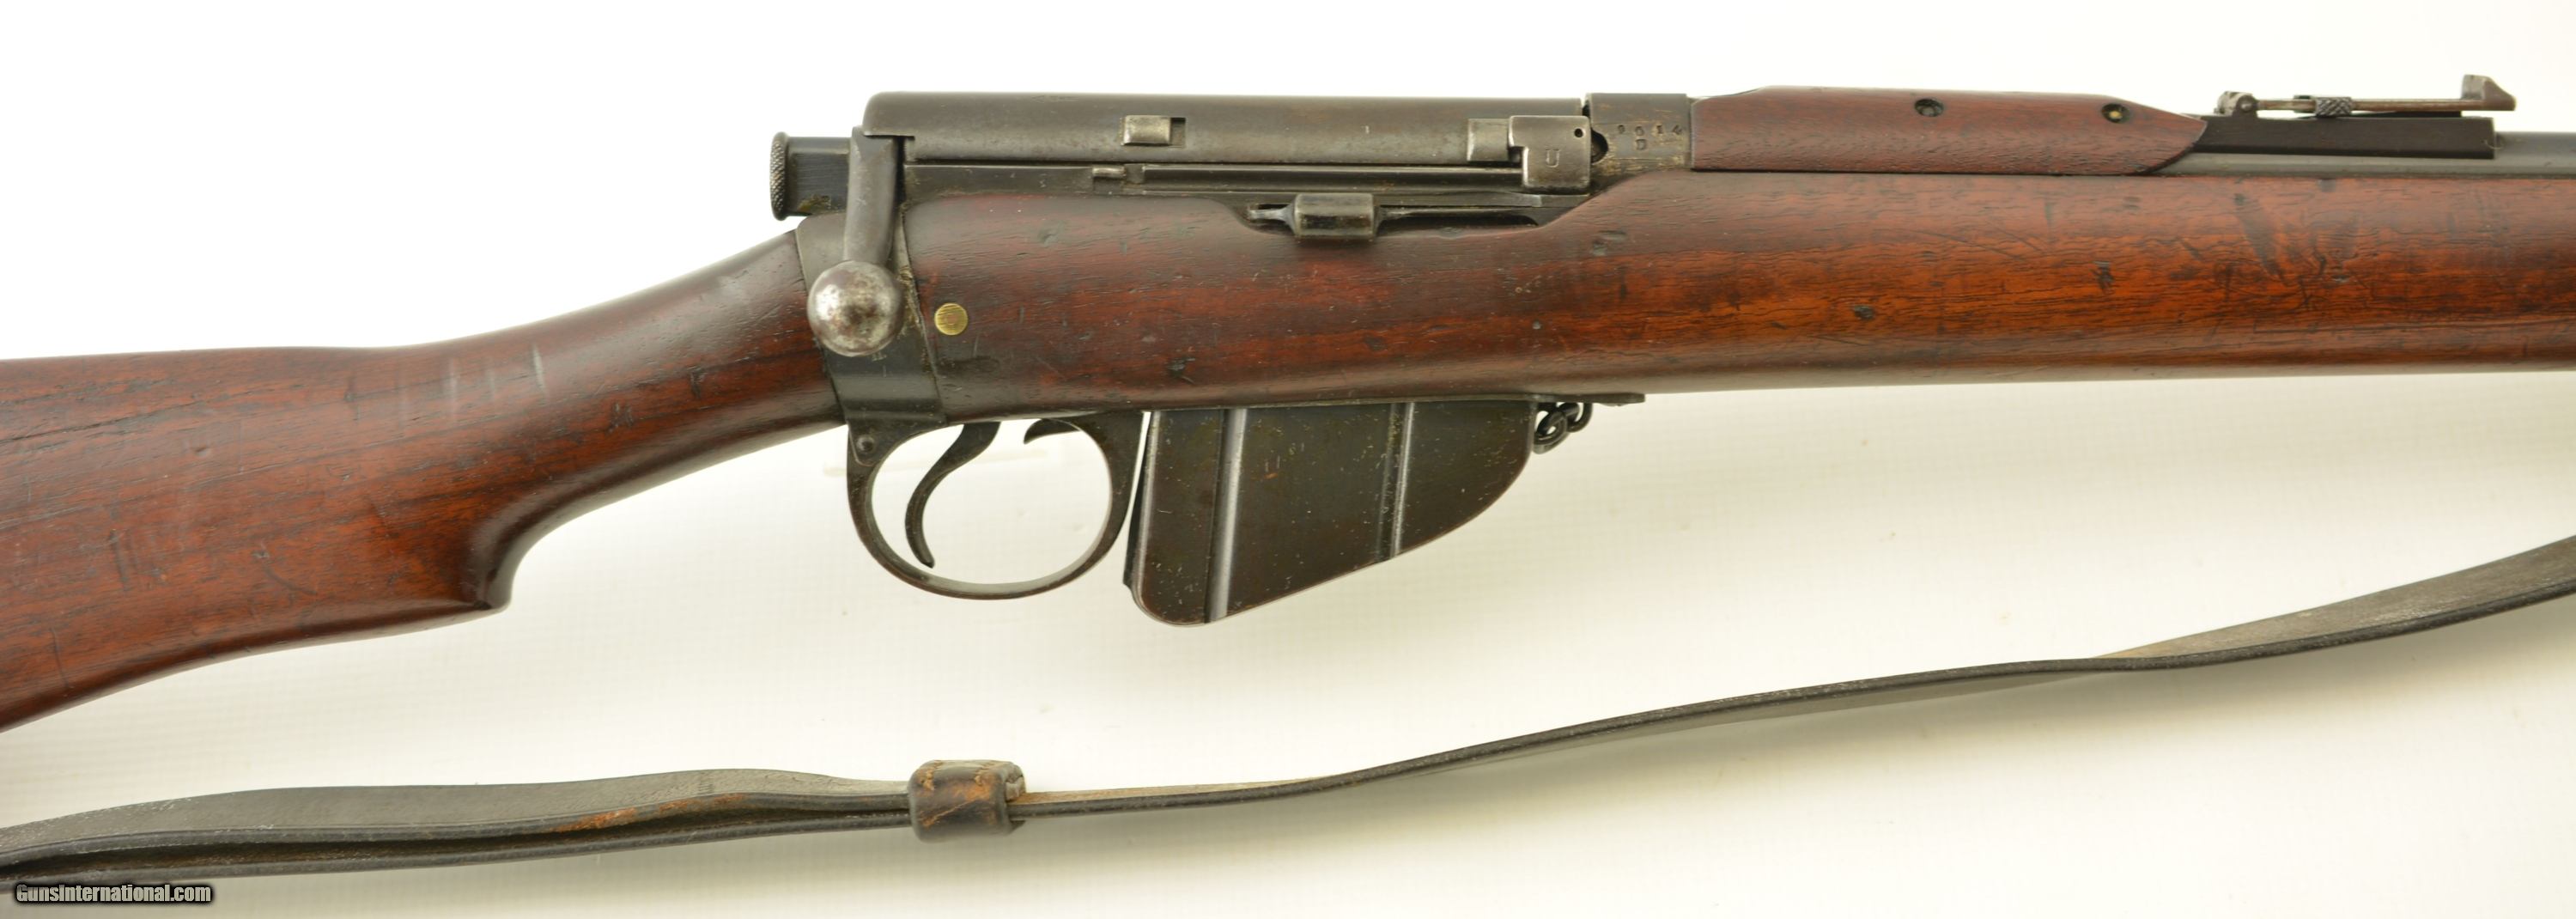 British Lee-Metford Mk. II Rifle (Canadian Marked)